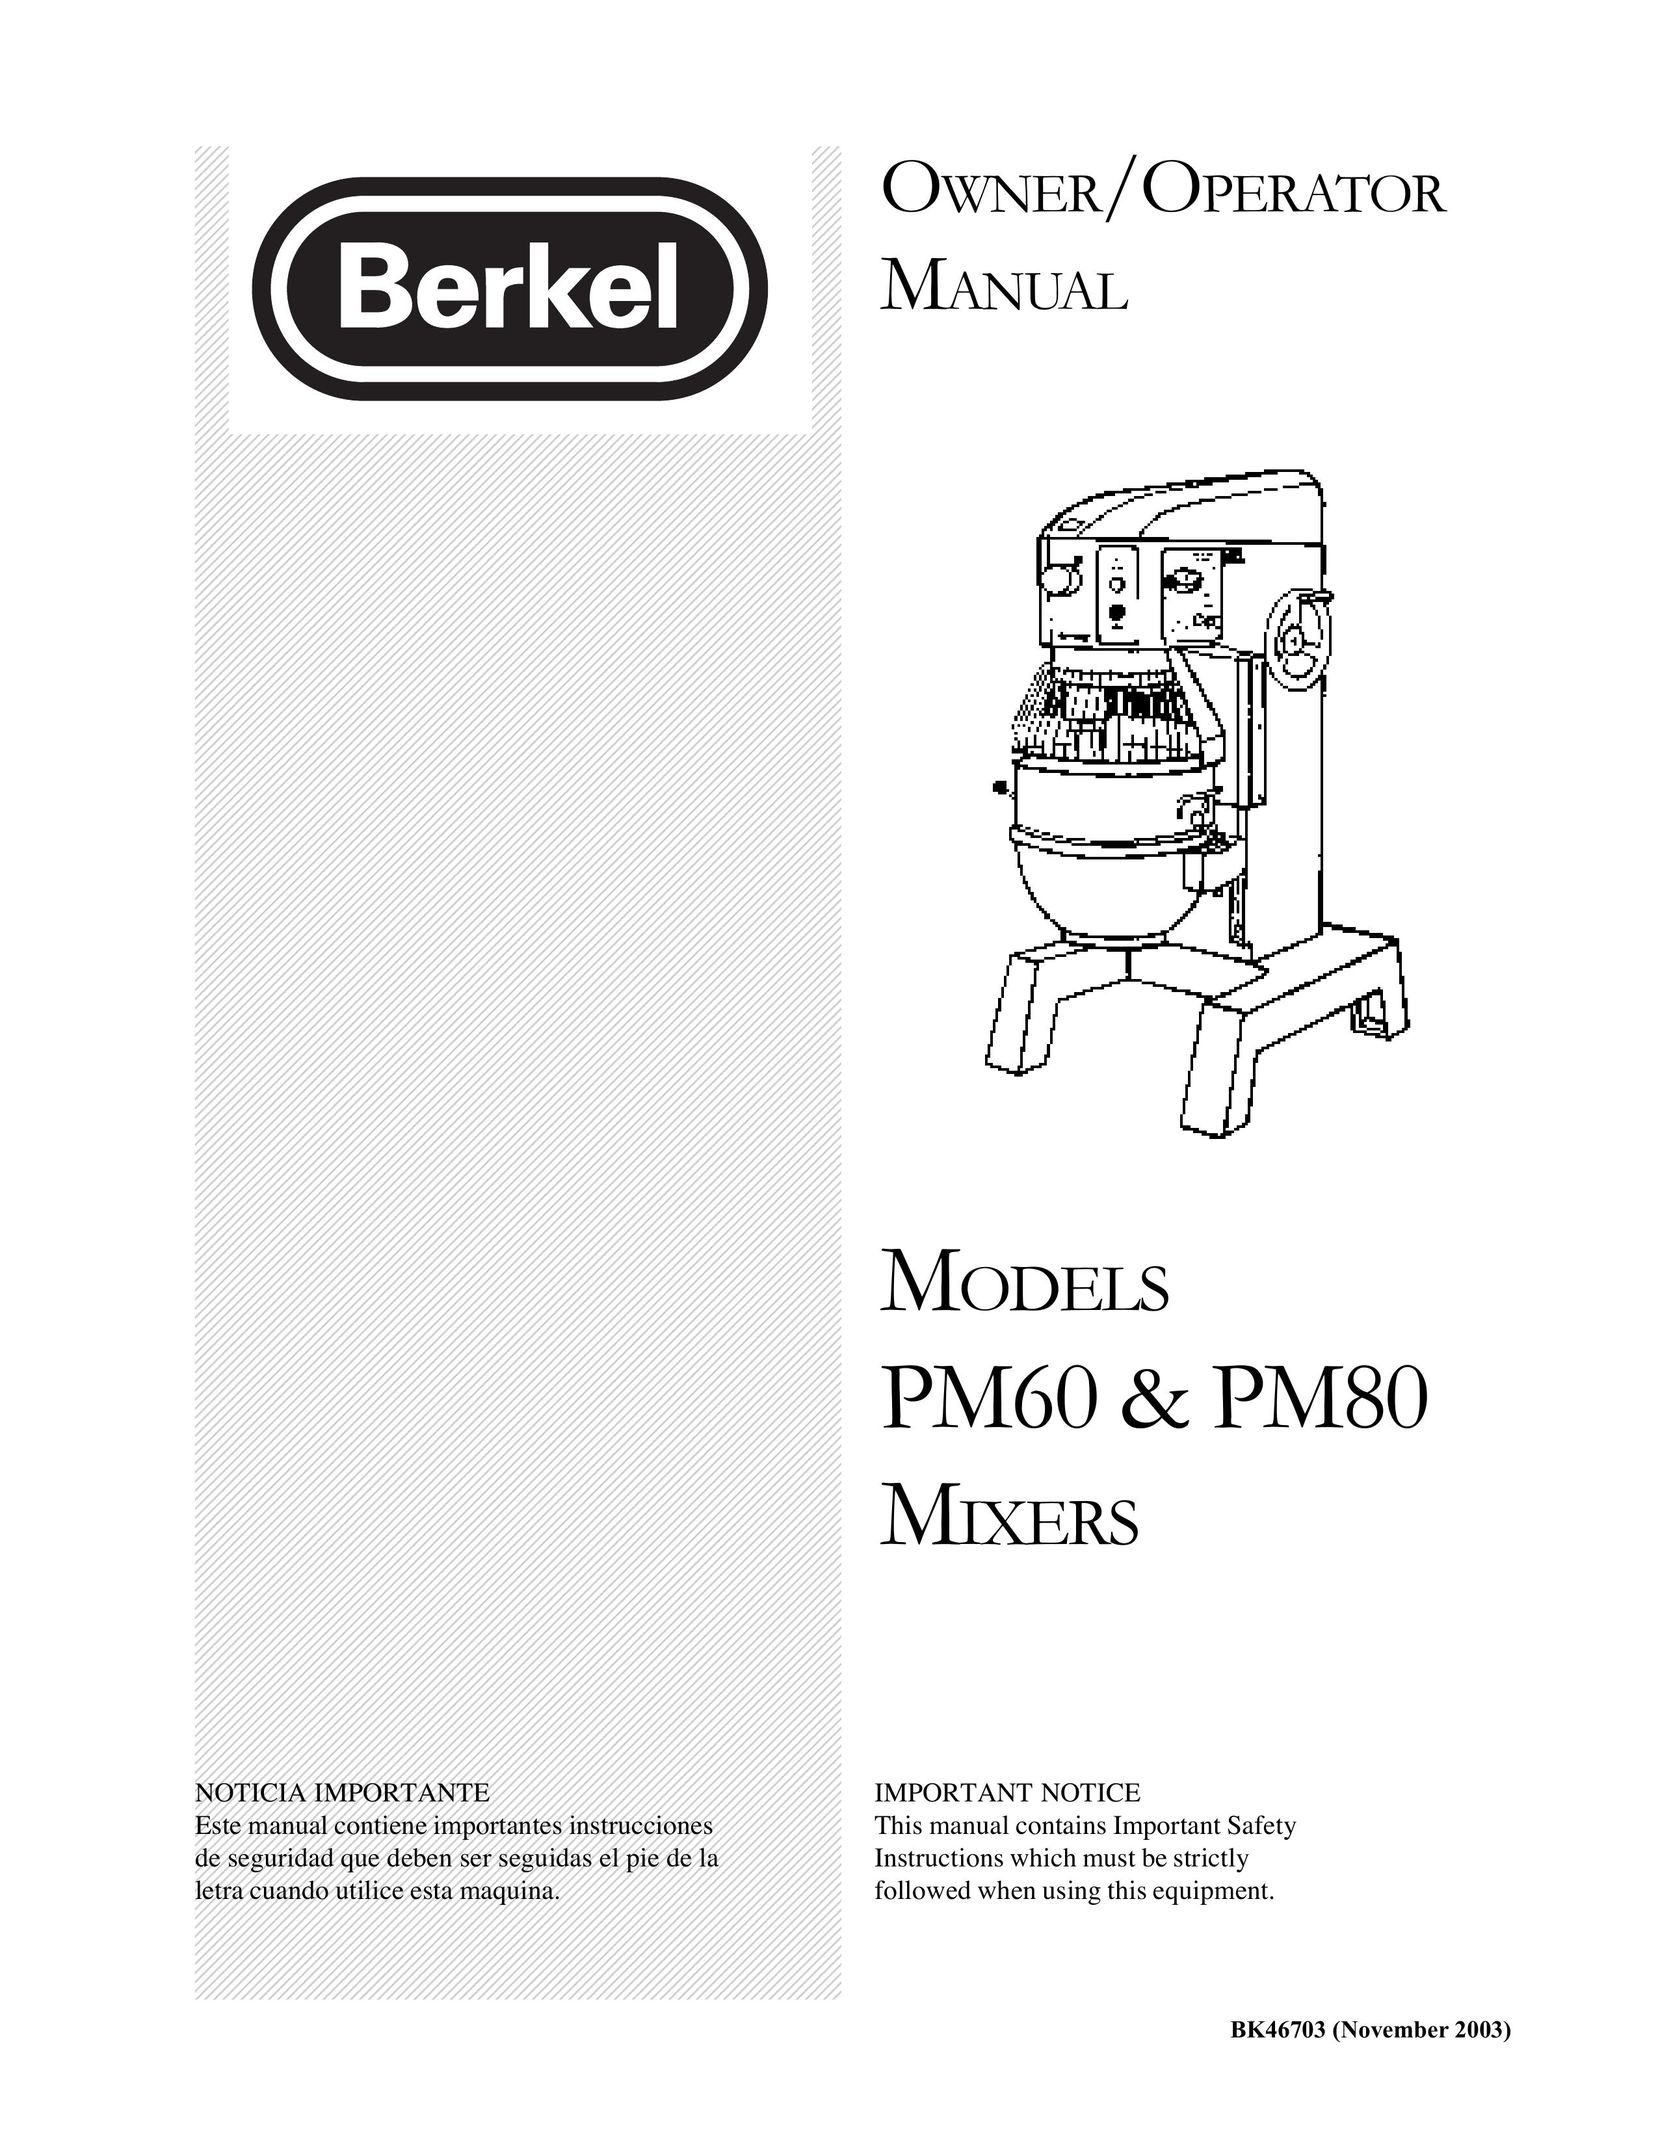 Berkel PM60 Mixer User Manual